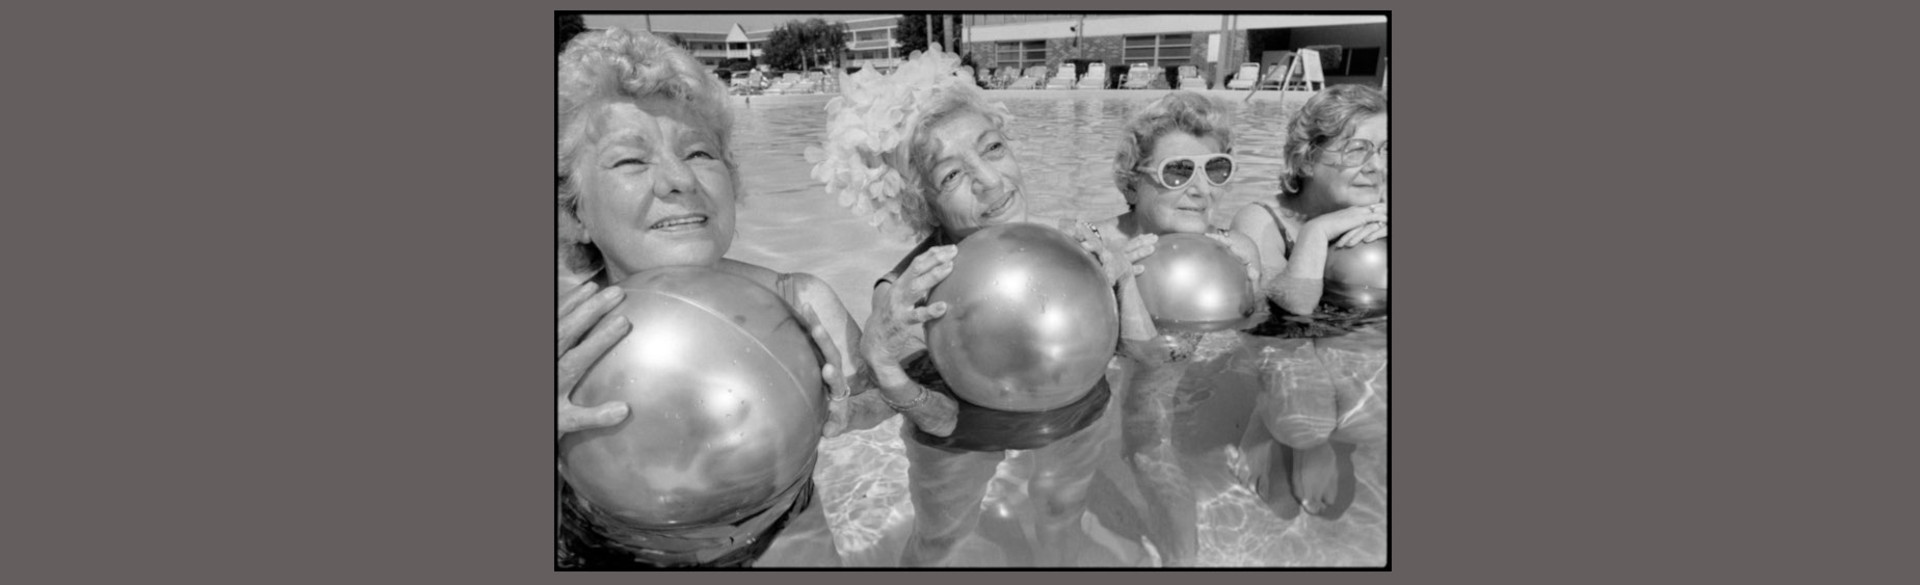 Mary Ellen Mark, Water exercise group (Wassergymnastikgruppe), St. Petersburg, Florida, USA, 1986 © Mary Ellen Mark